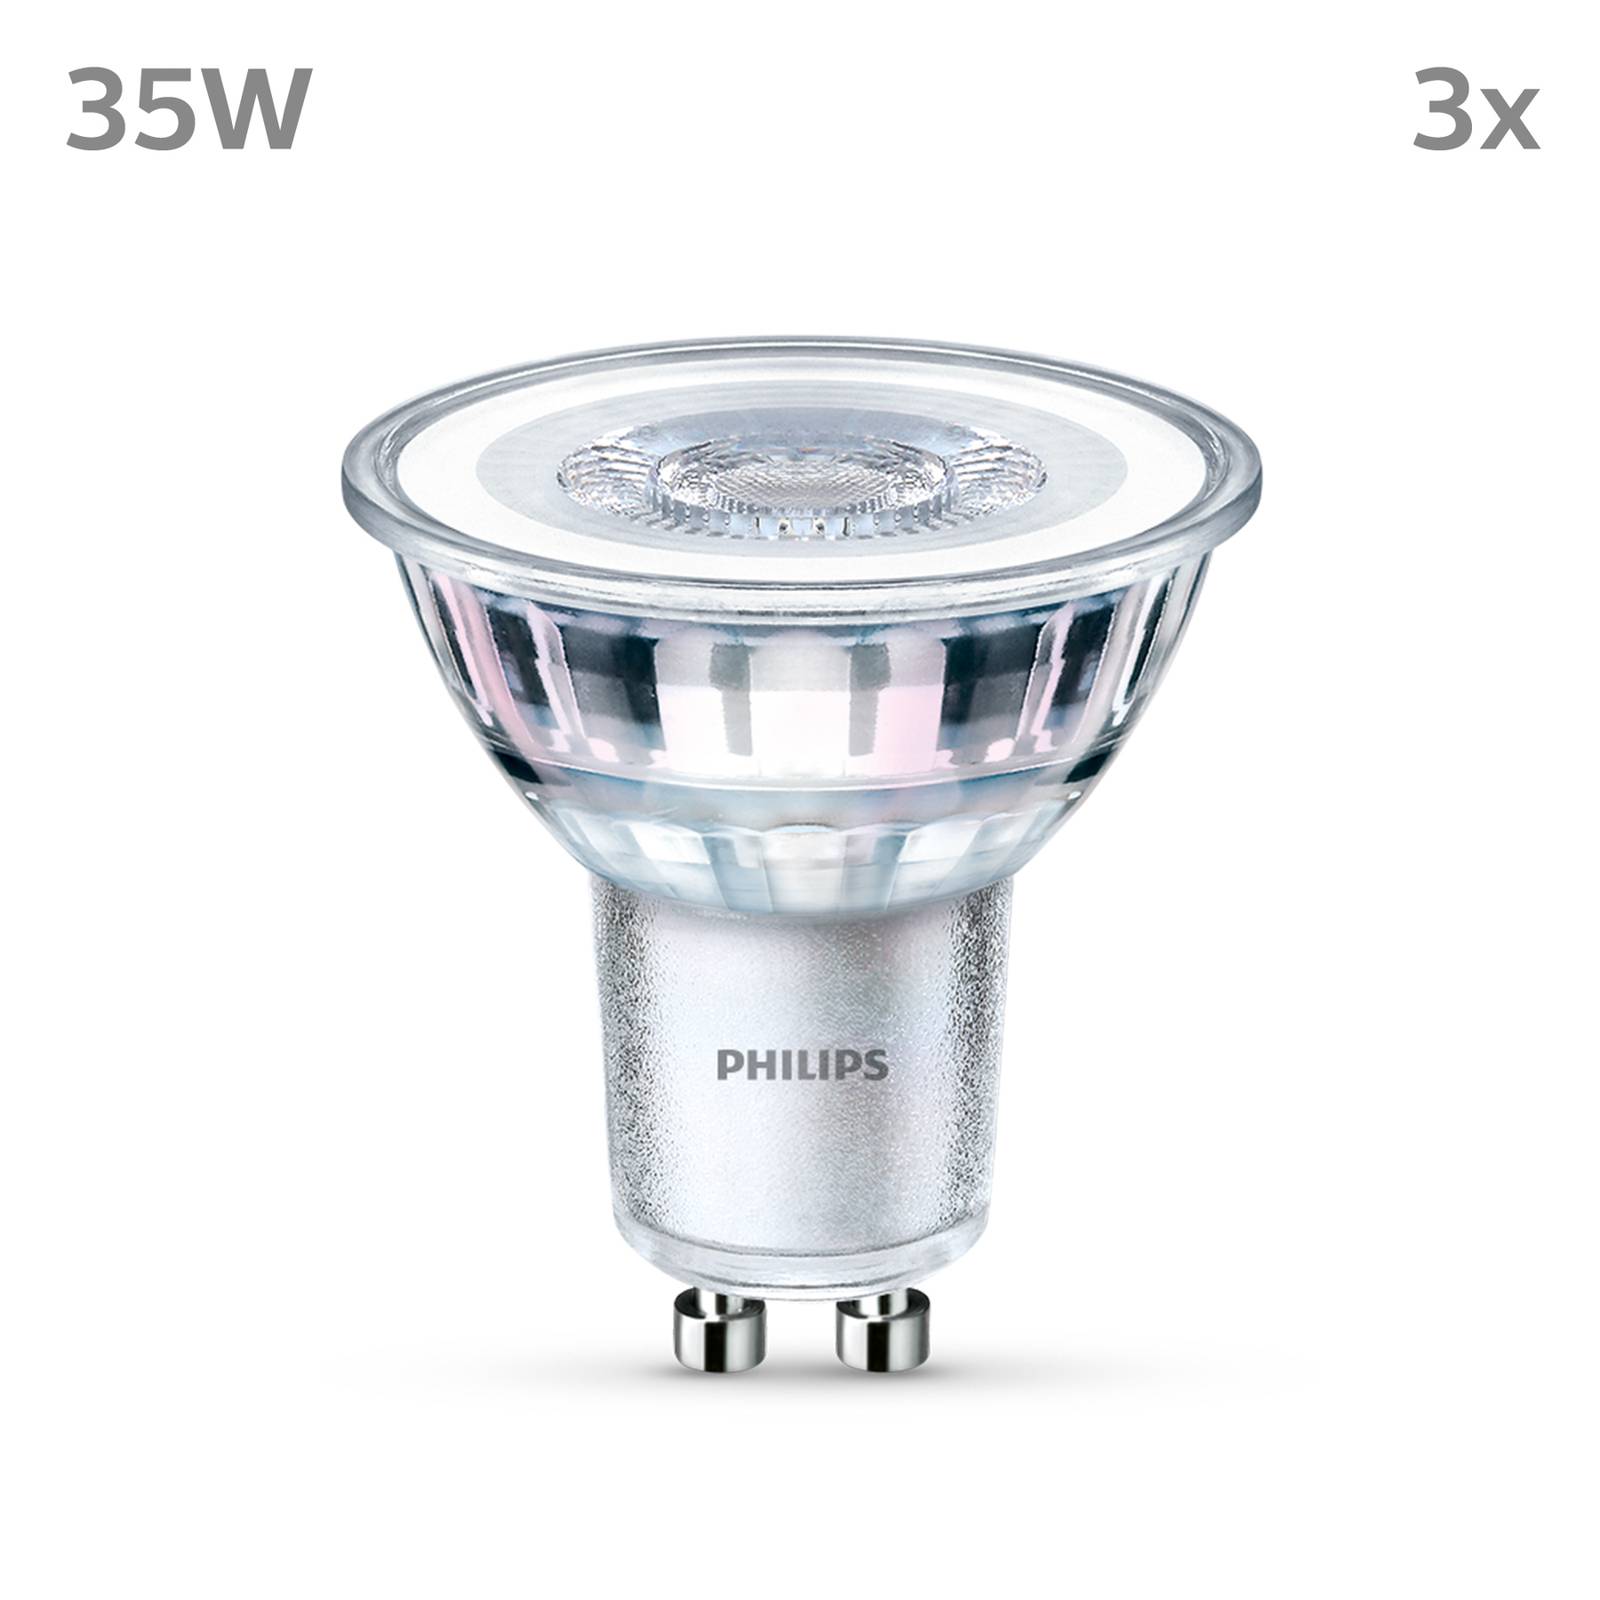 Philips Philips LED žárovka GU10 3,5W 255lm 827 čirá 36° 3